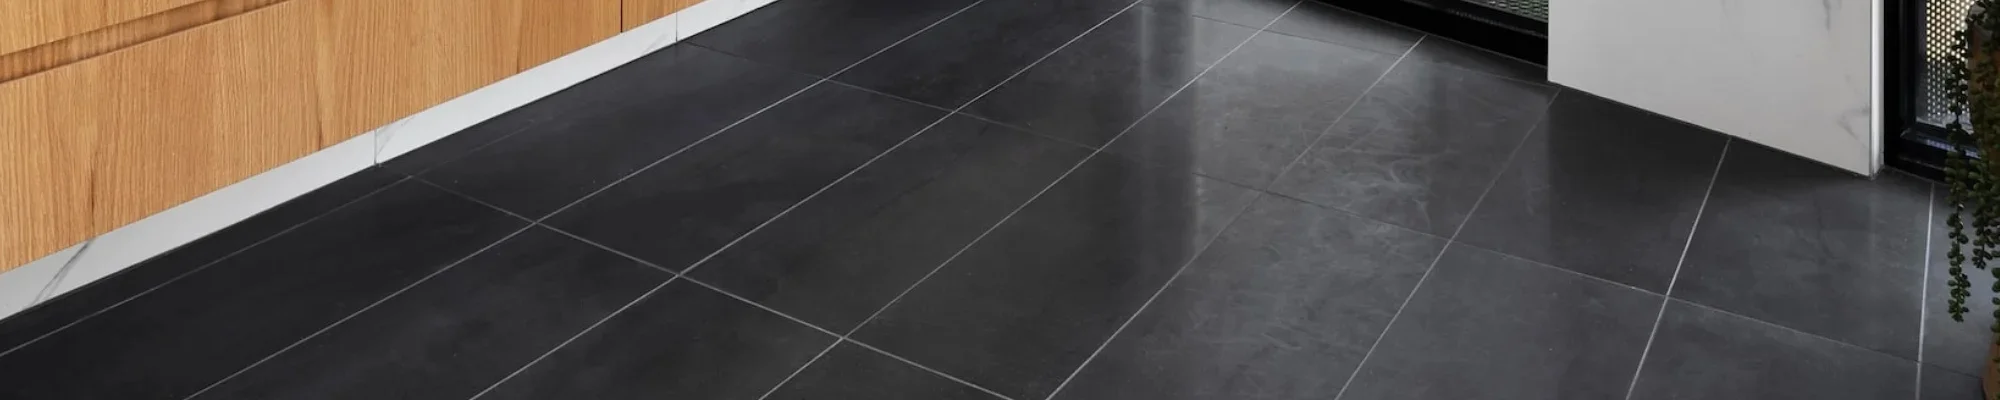 Dark tile in a modern bathroom | Altimate Flooring | Rapid City, SD